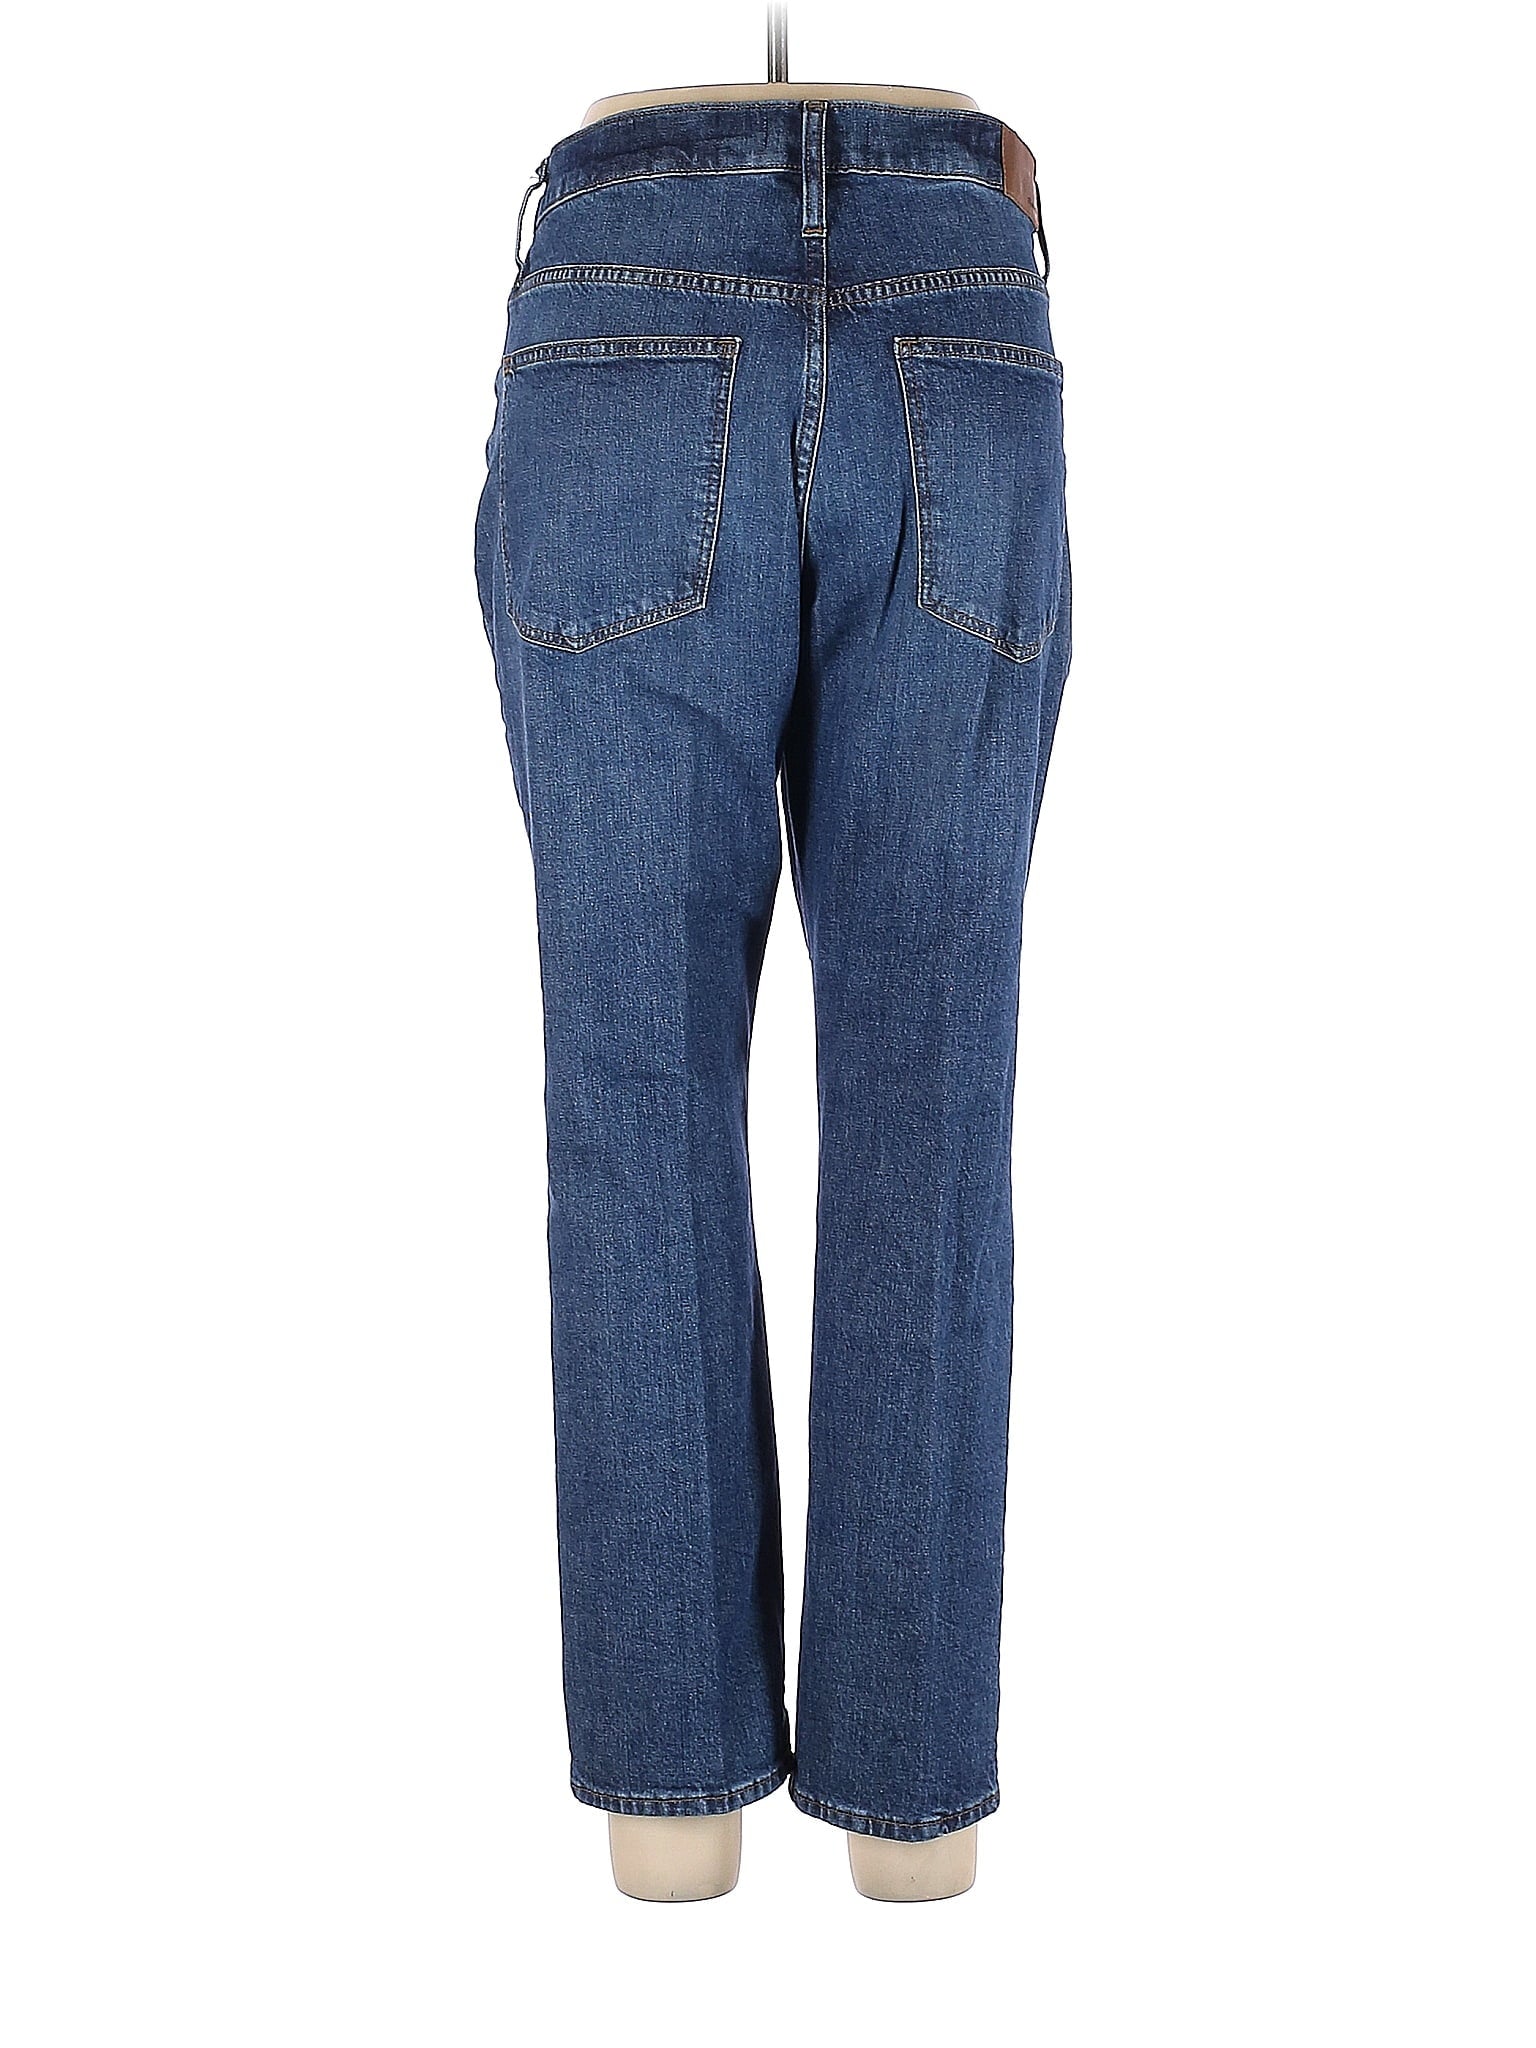 High-Rise Boyjeans Jeans in Dark Wash waist size - 32 P